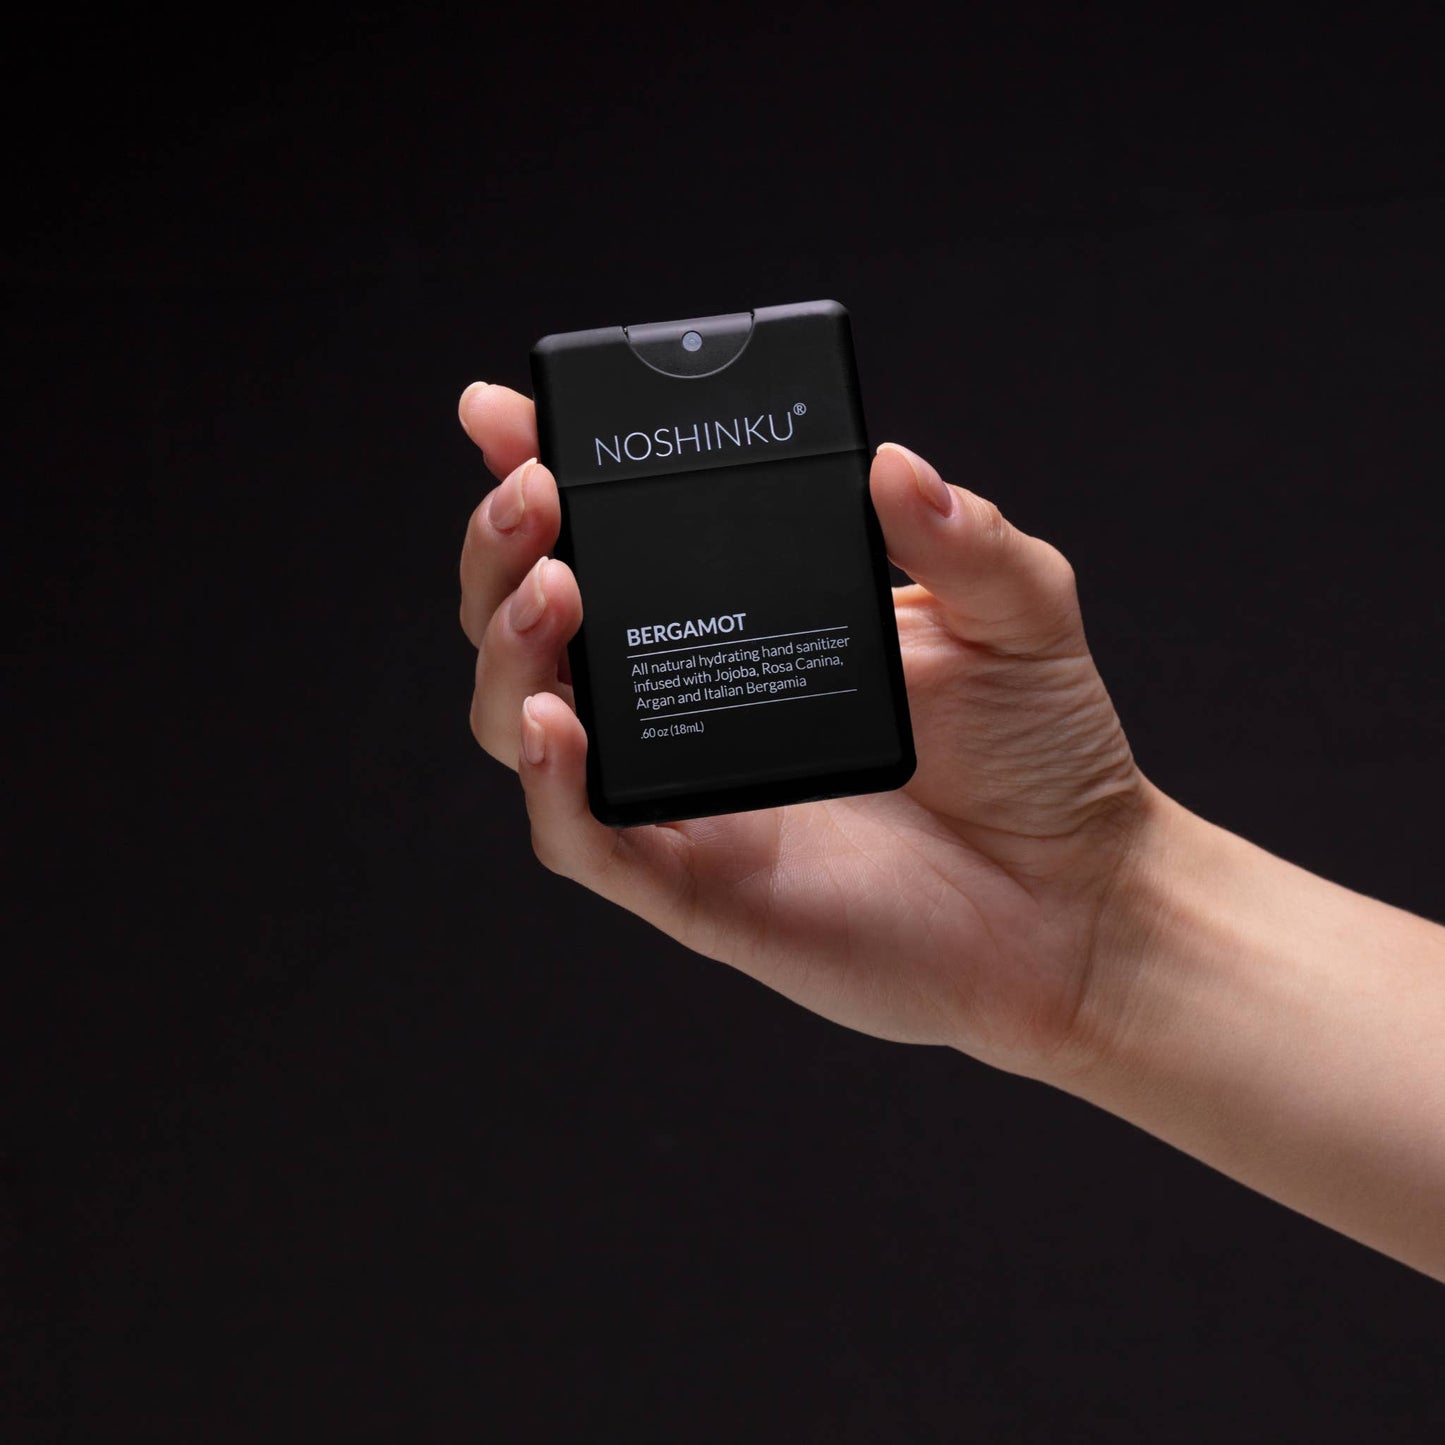 Bergamot Nourishing Pocket Hand Sanitizer